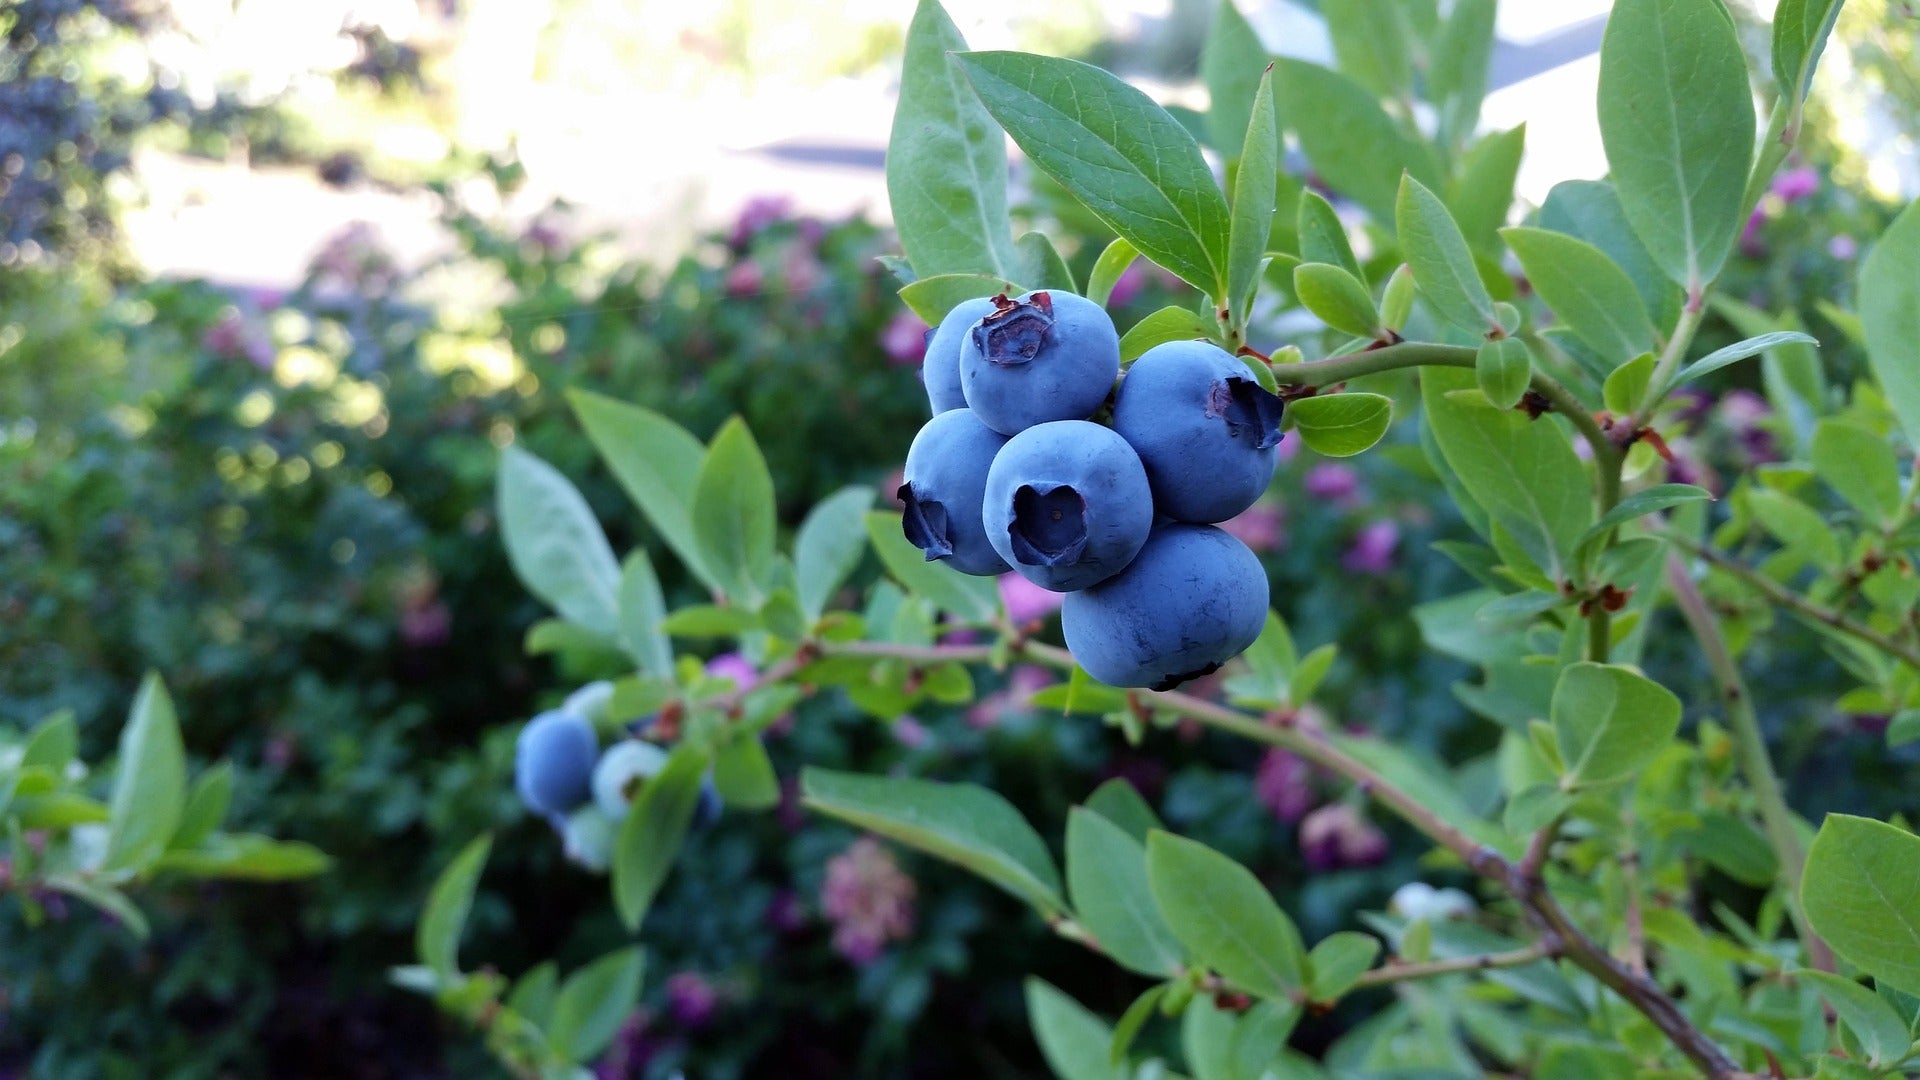 HB-101 infused blueberries